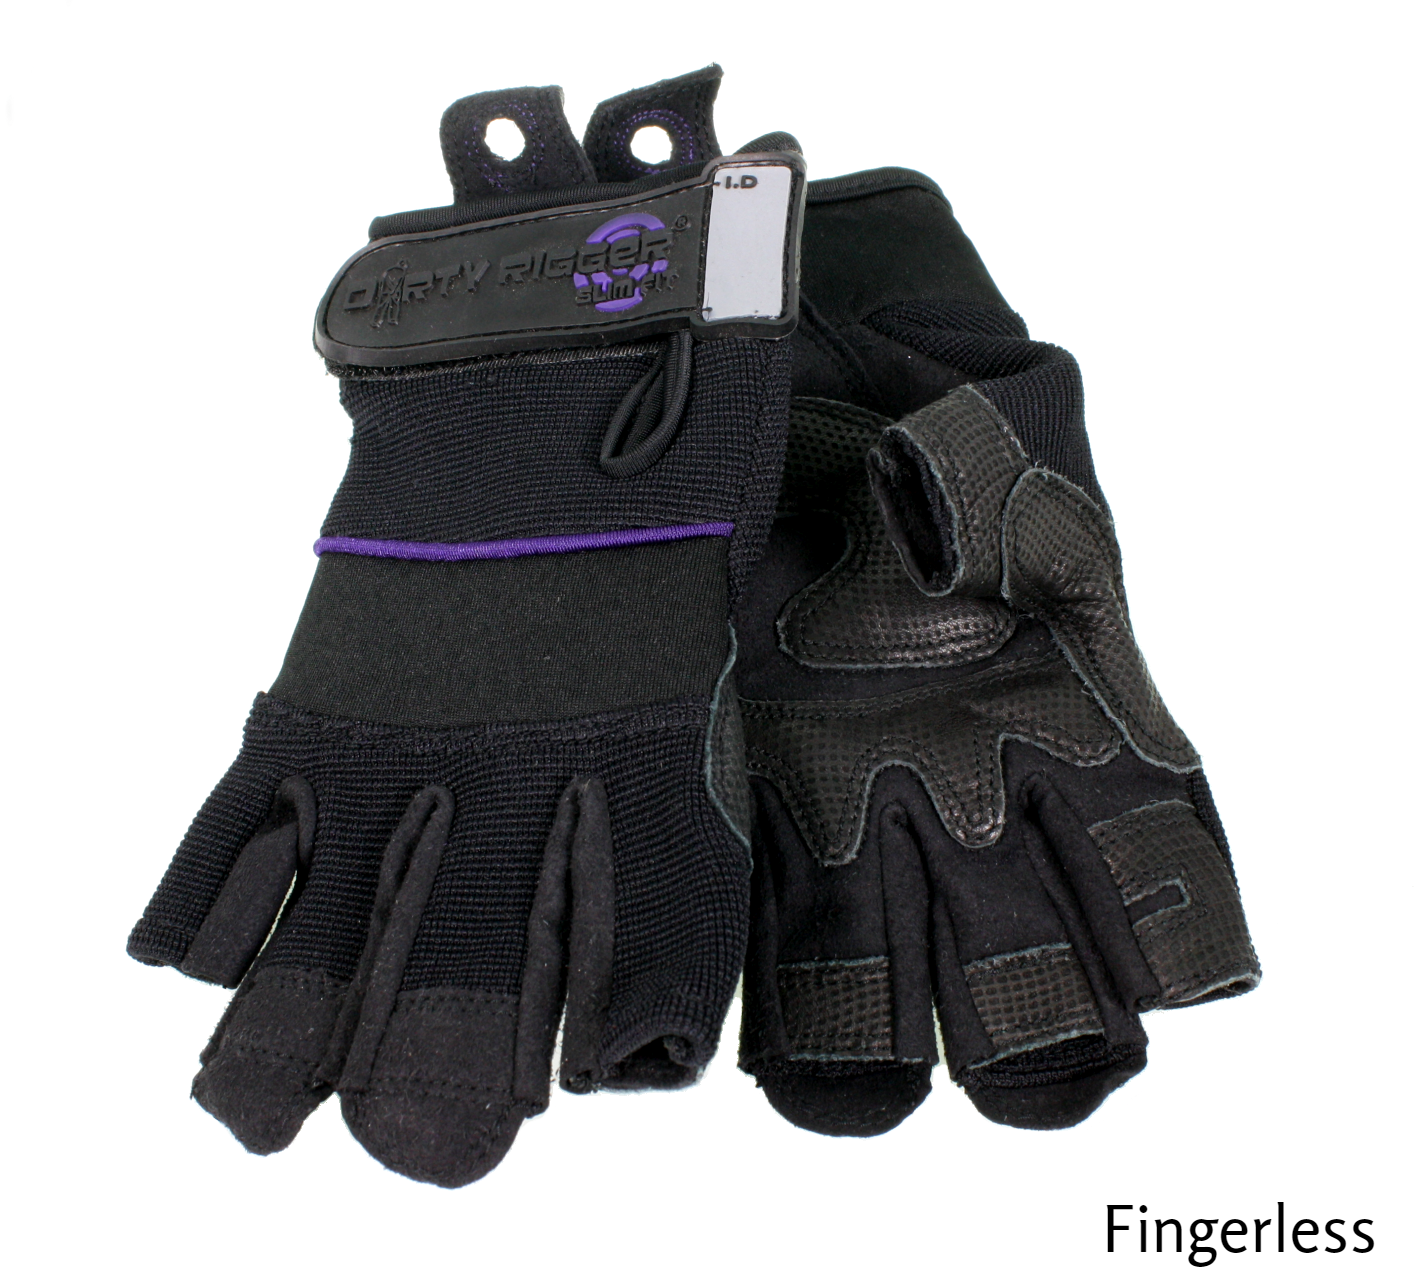 Kupo Ku-Hand Goatskin Grip Gloves, Large, Black